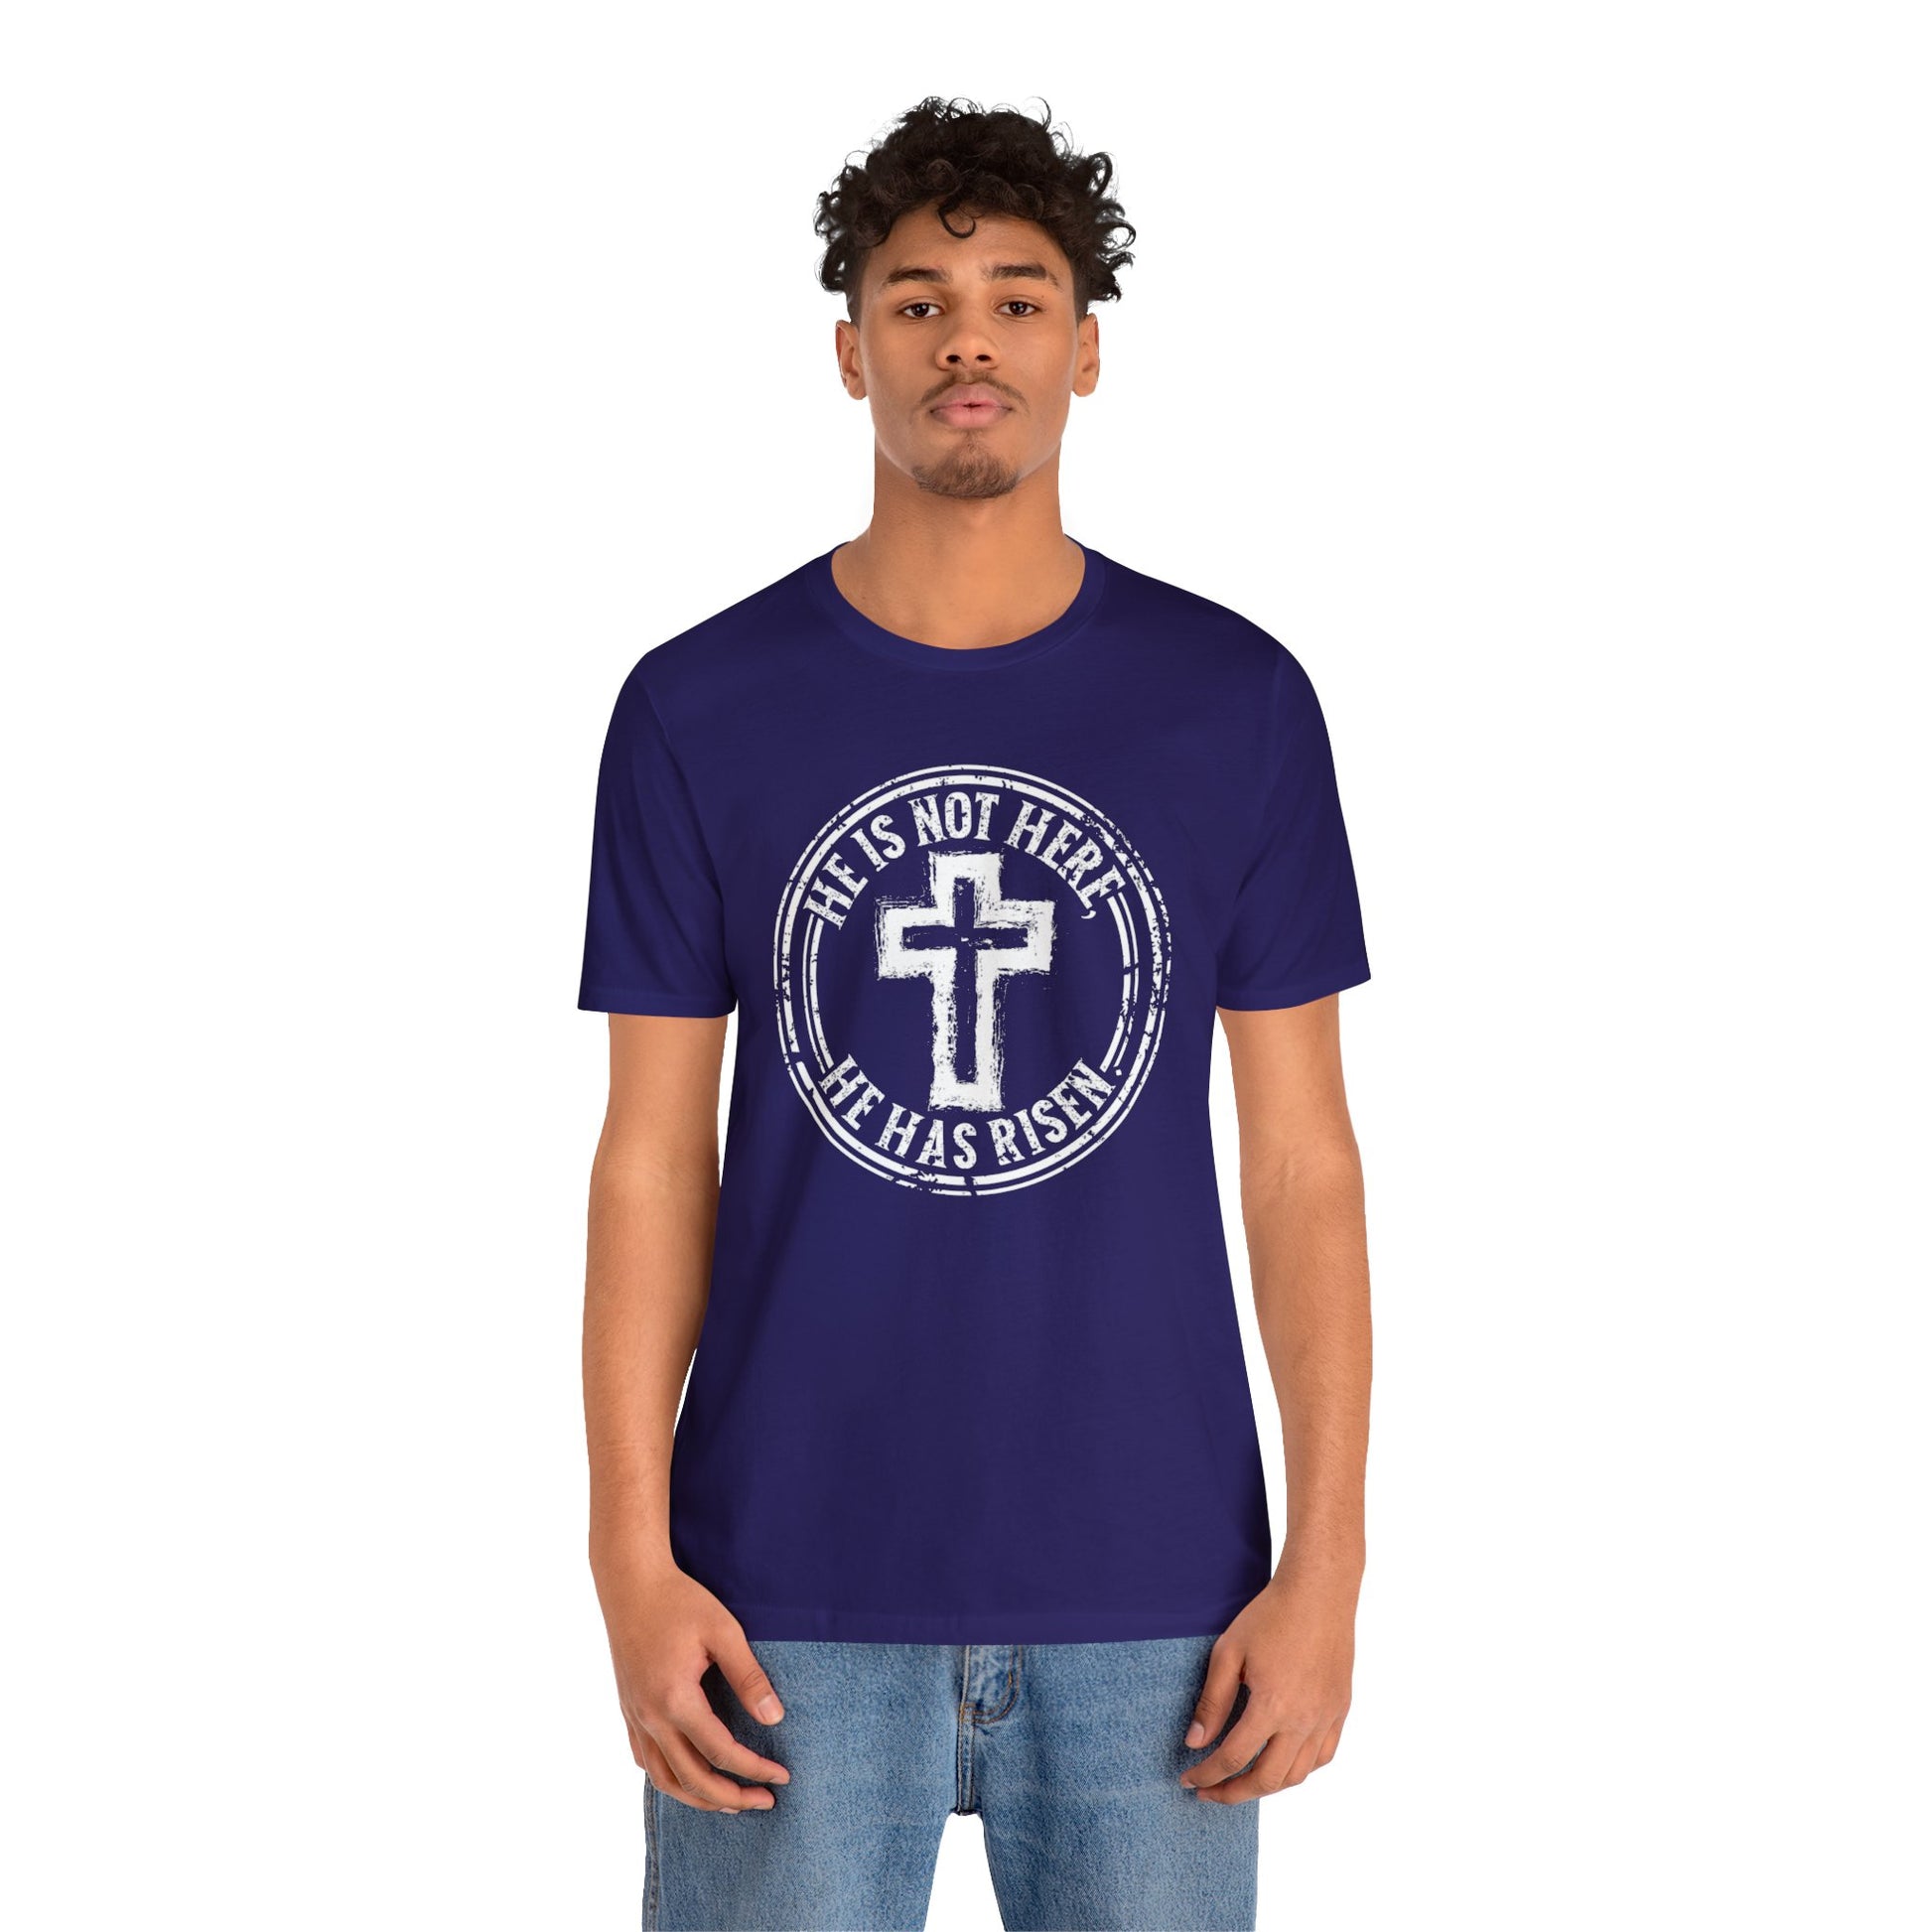 He Is Not Here He Has Risen Christian Faith Shirt